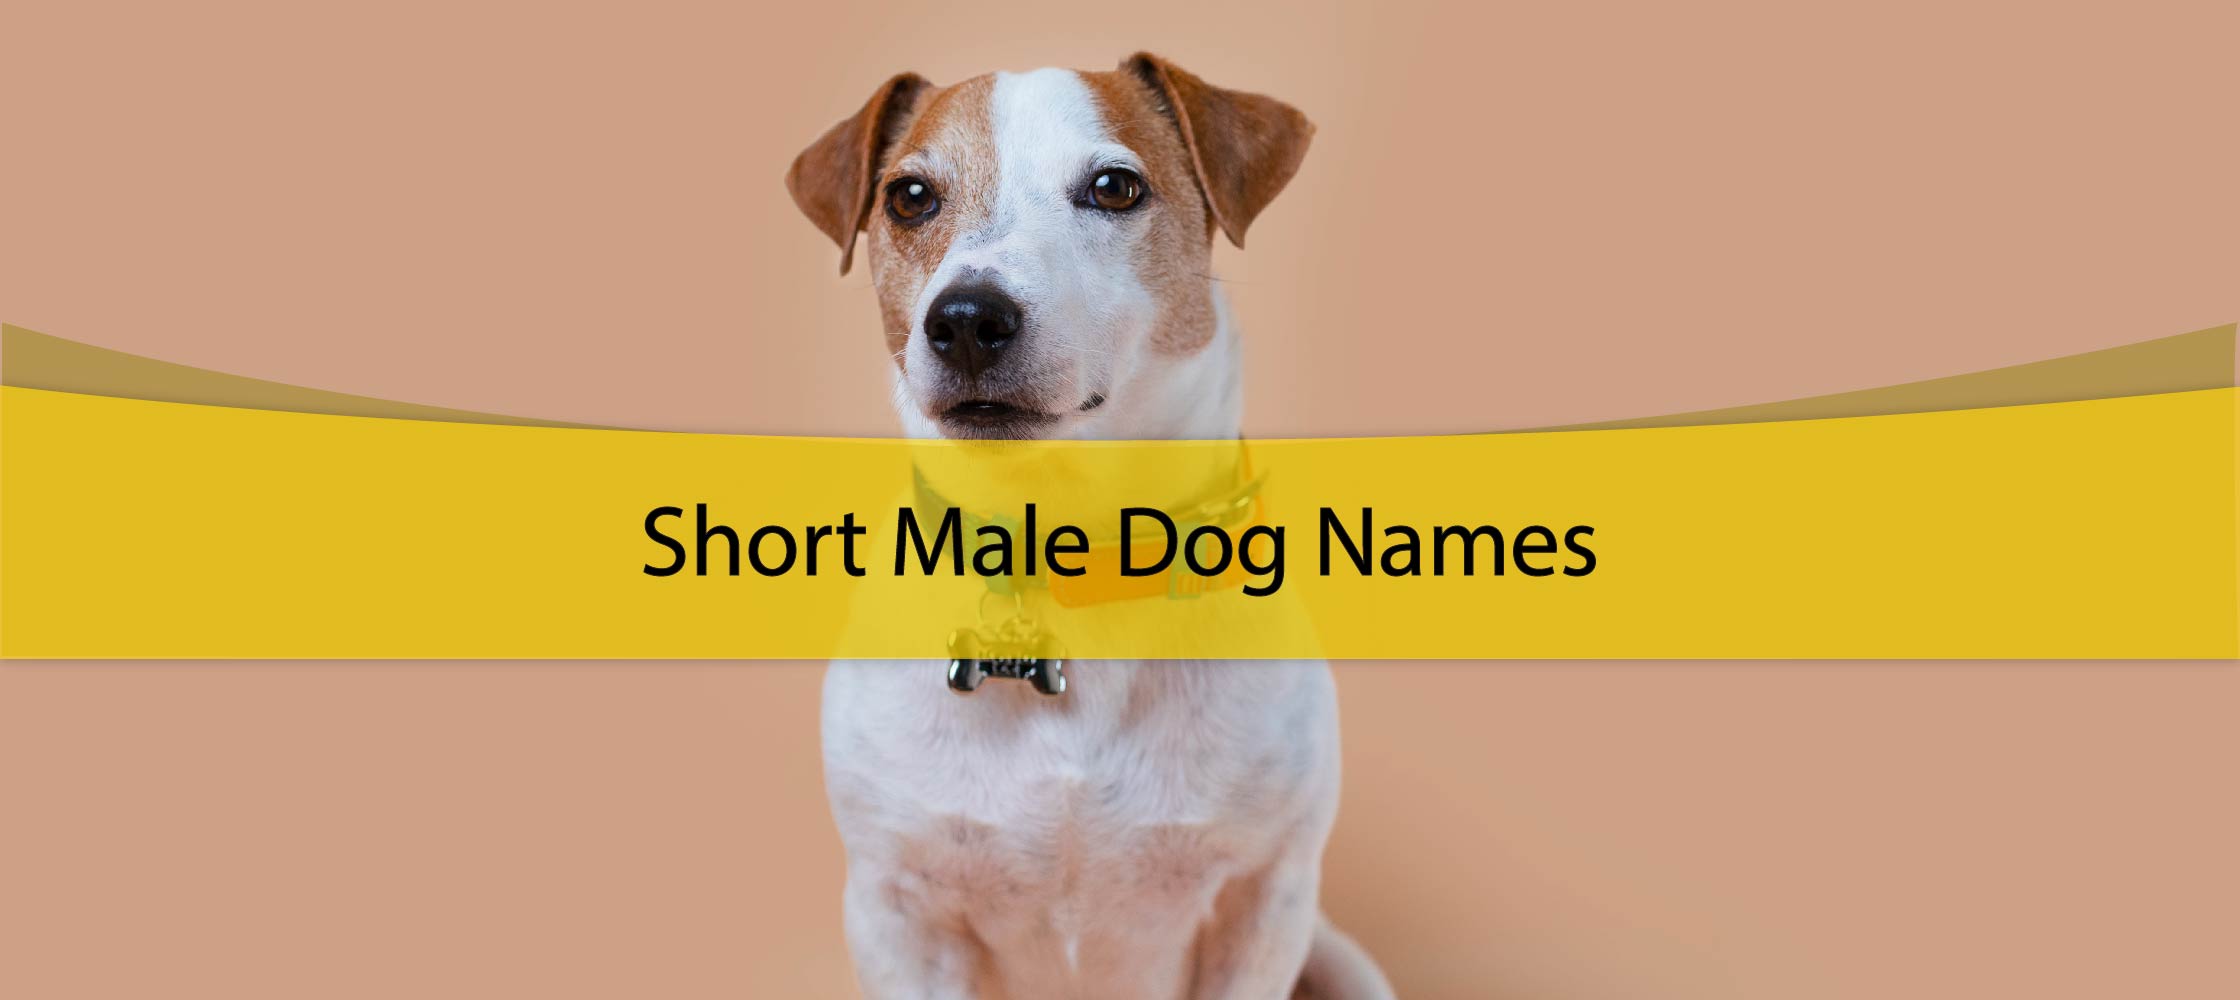 Short Male Dog Names